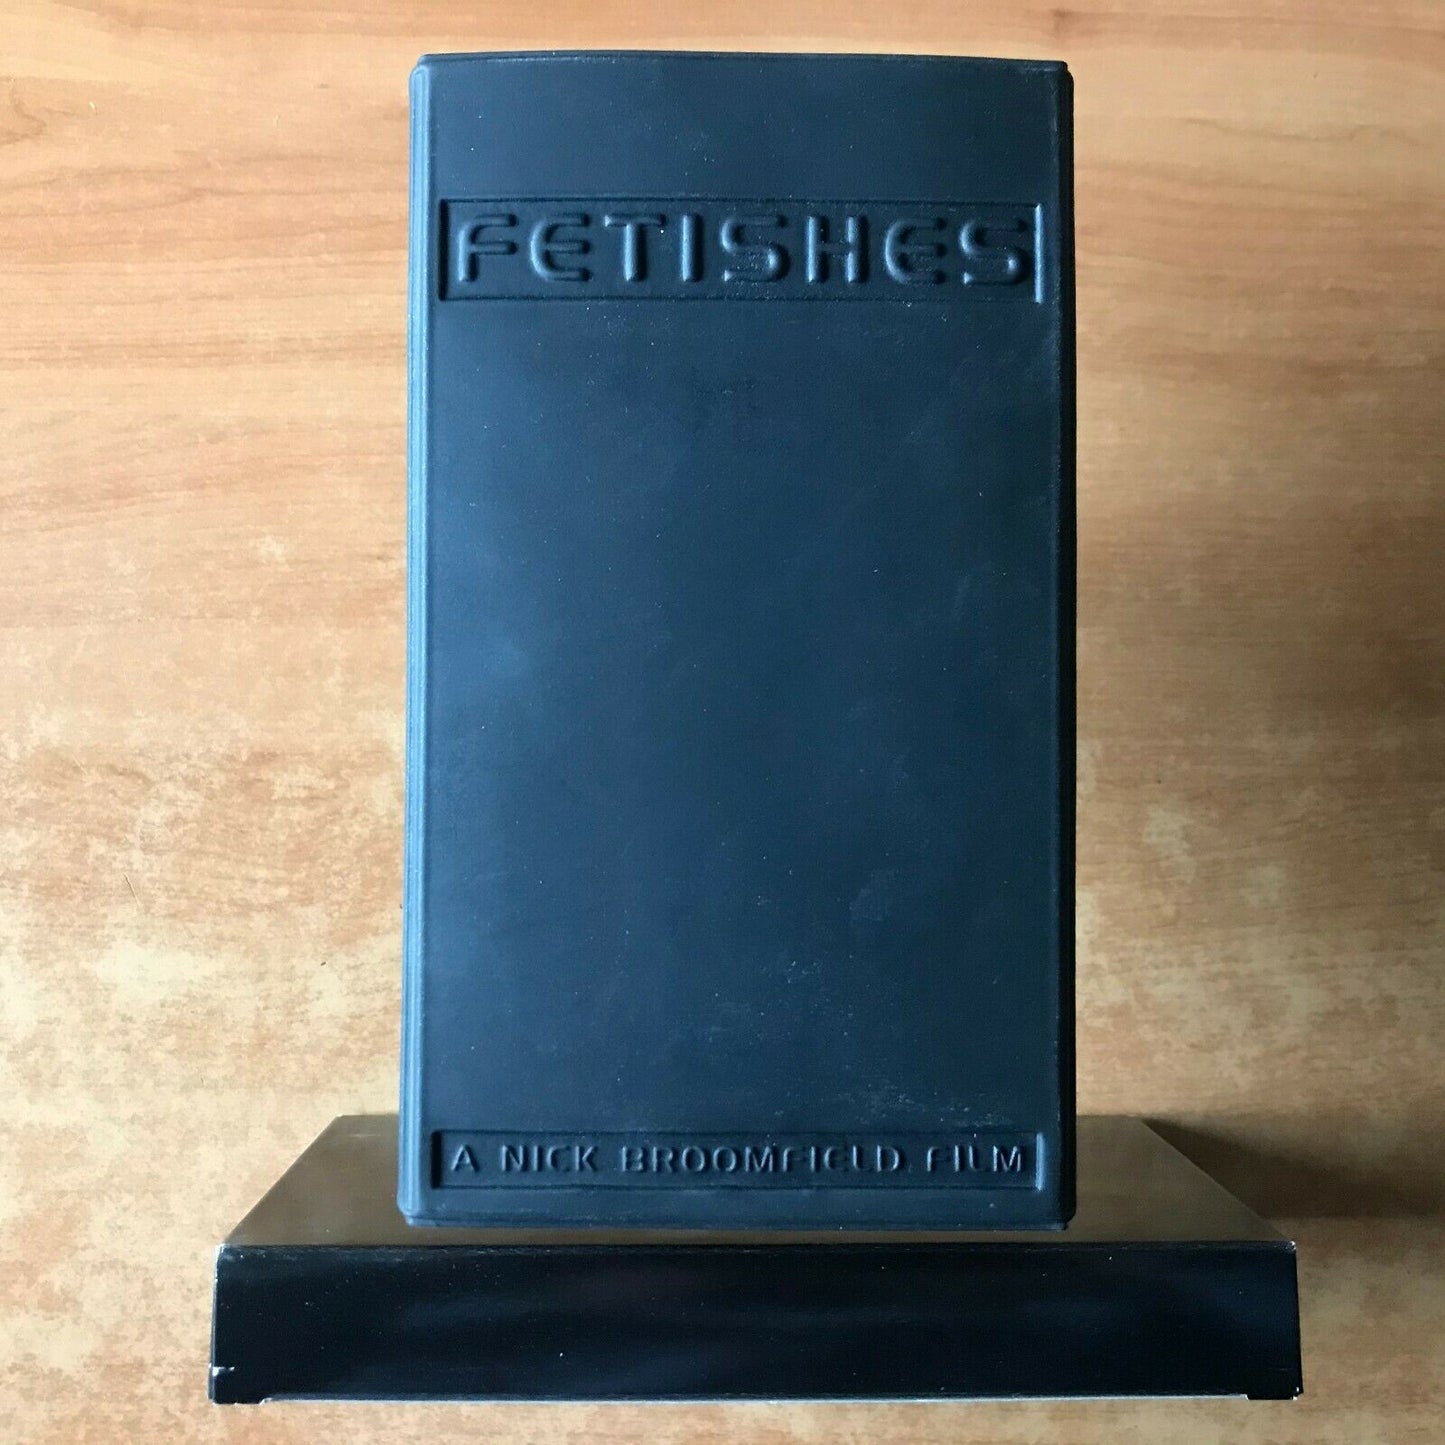 Fetishes (1996); [Nick Broomfield] Carton Box - Documentary (Denmark) Pal VHS-